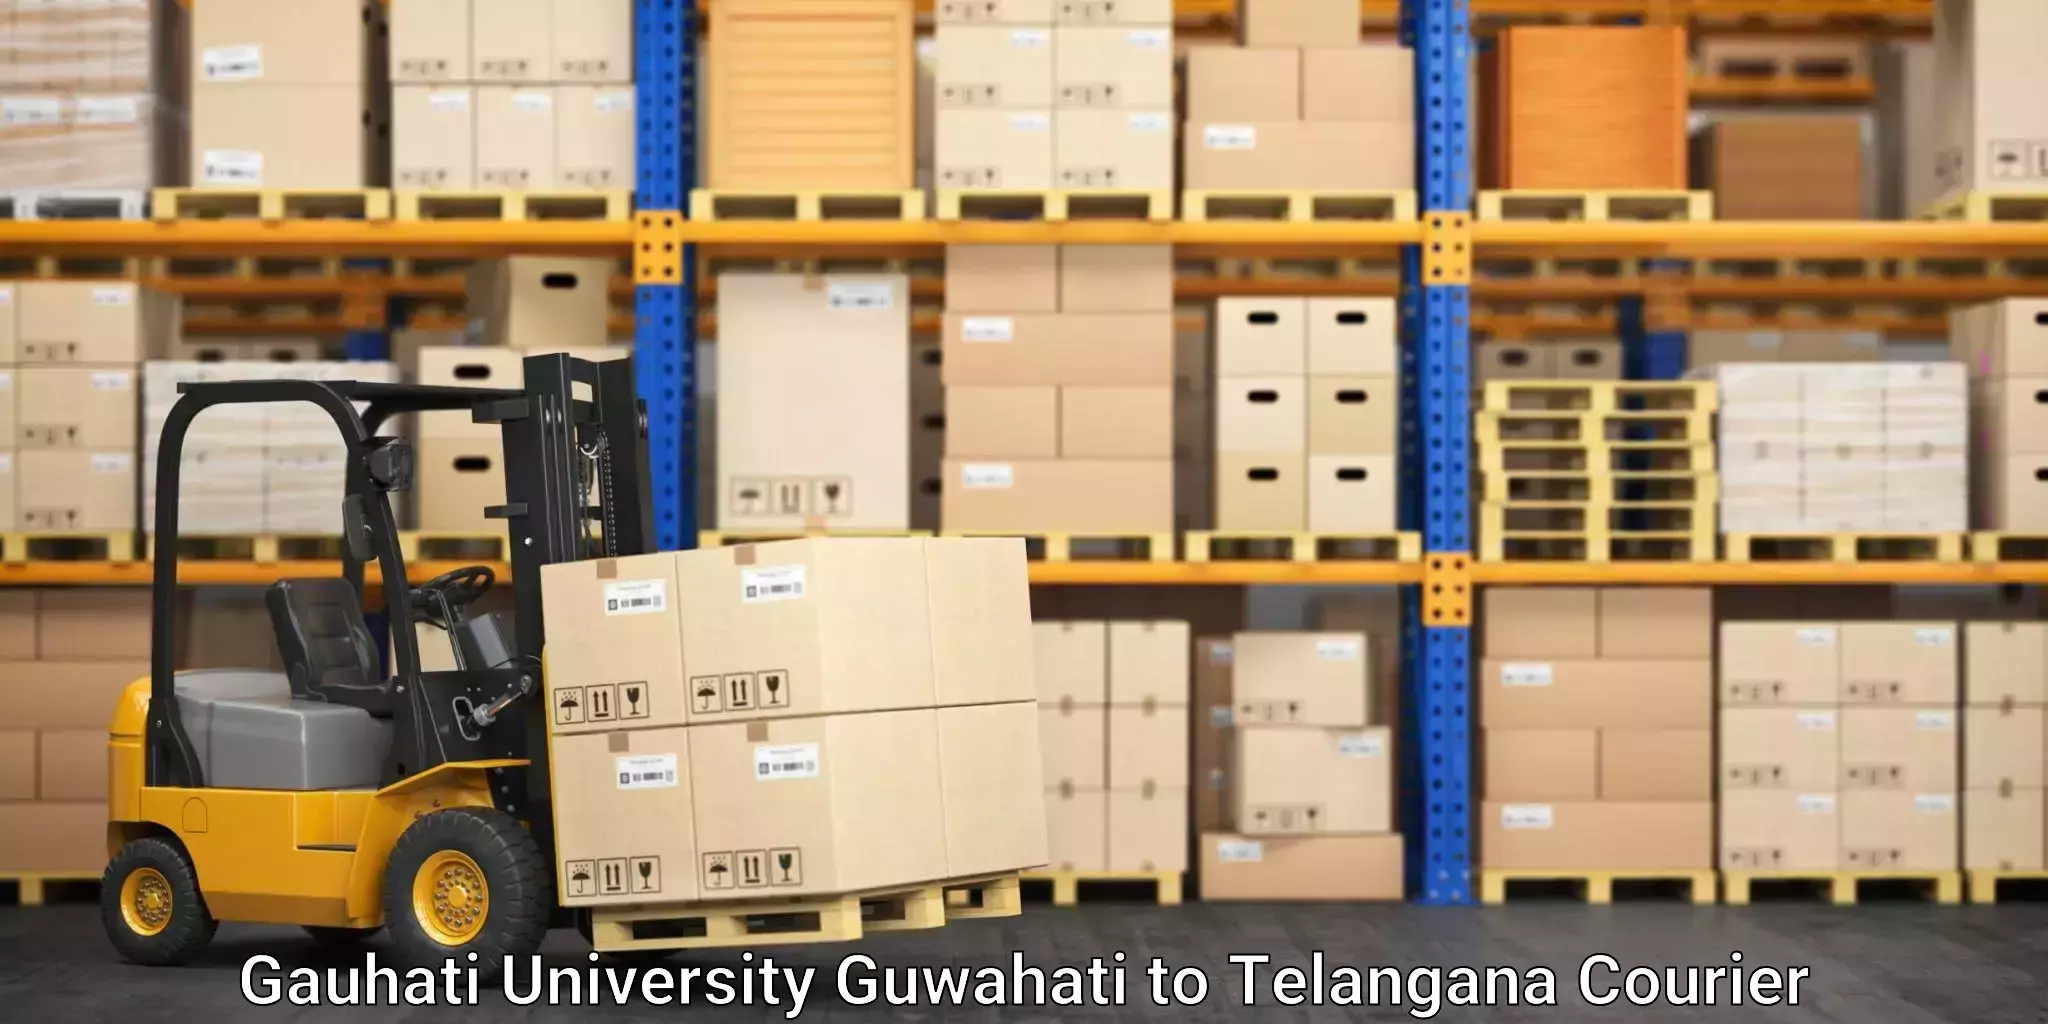 Secure package delivery in Gauhati University Guwahati to Aswaraopeta